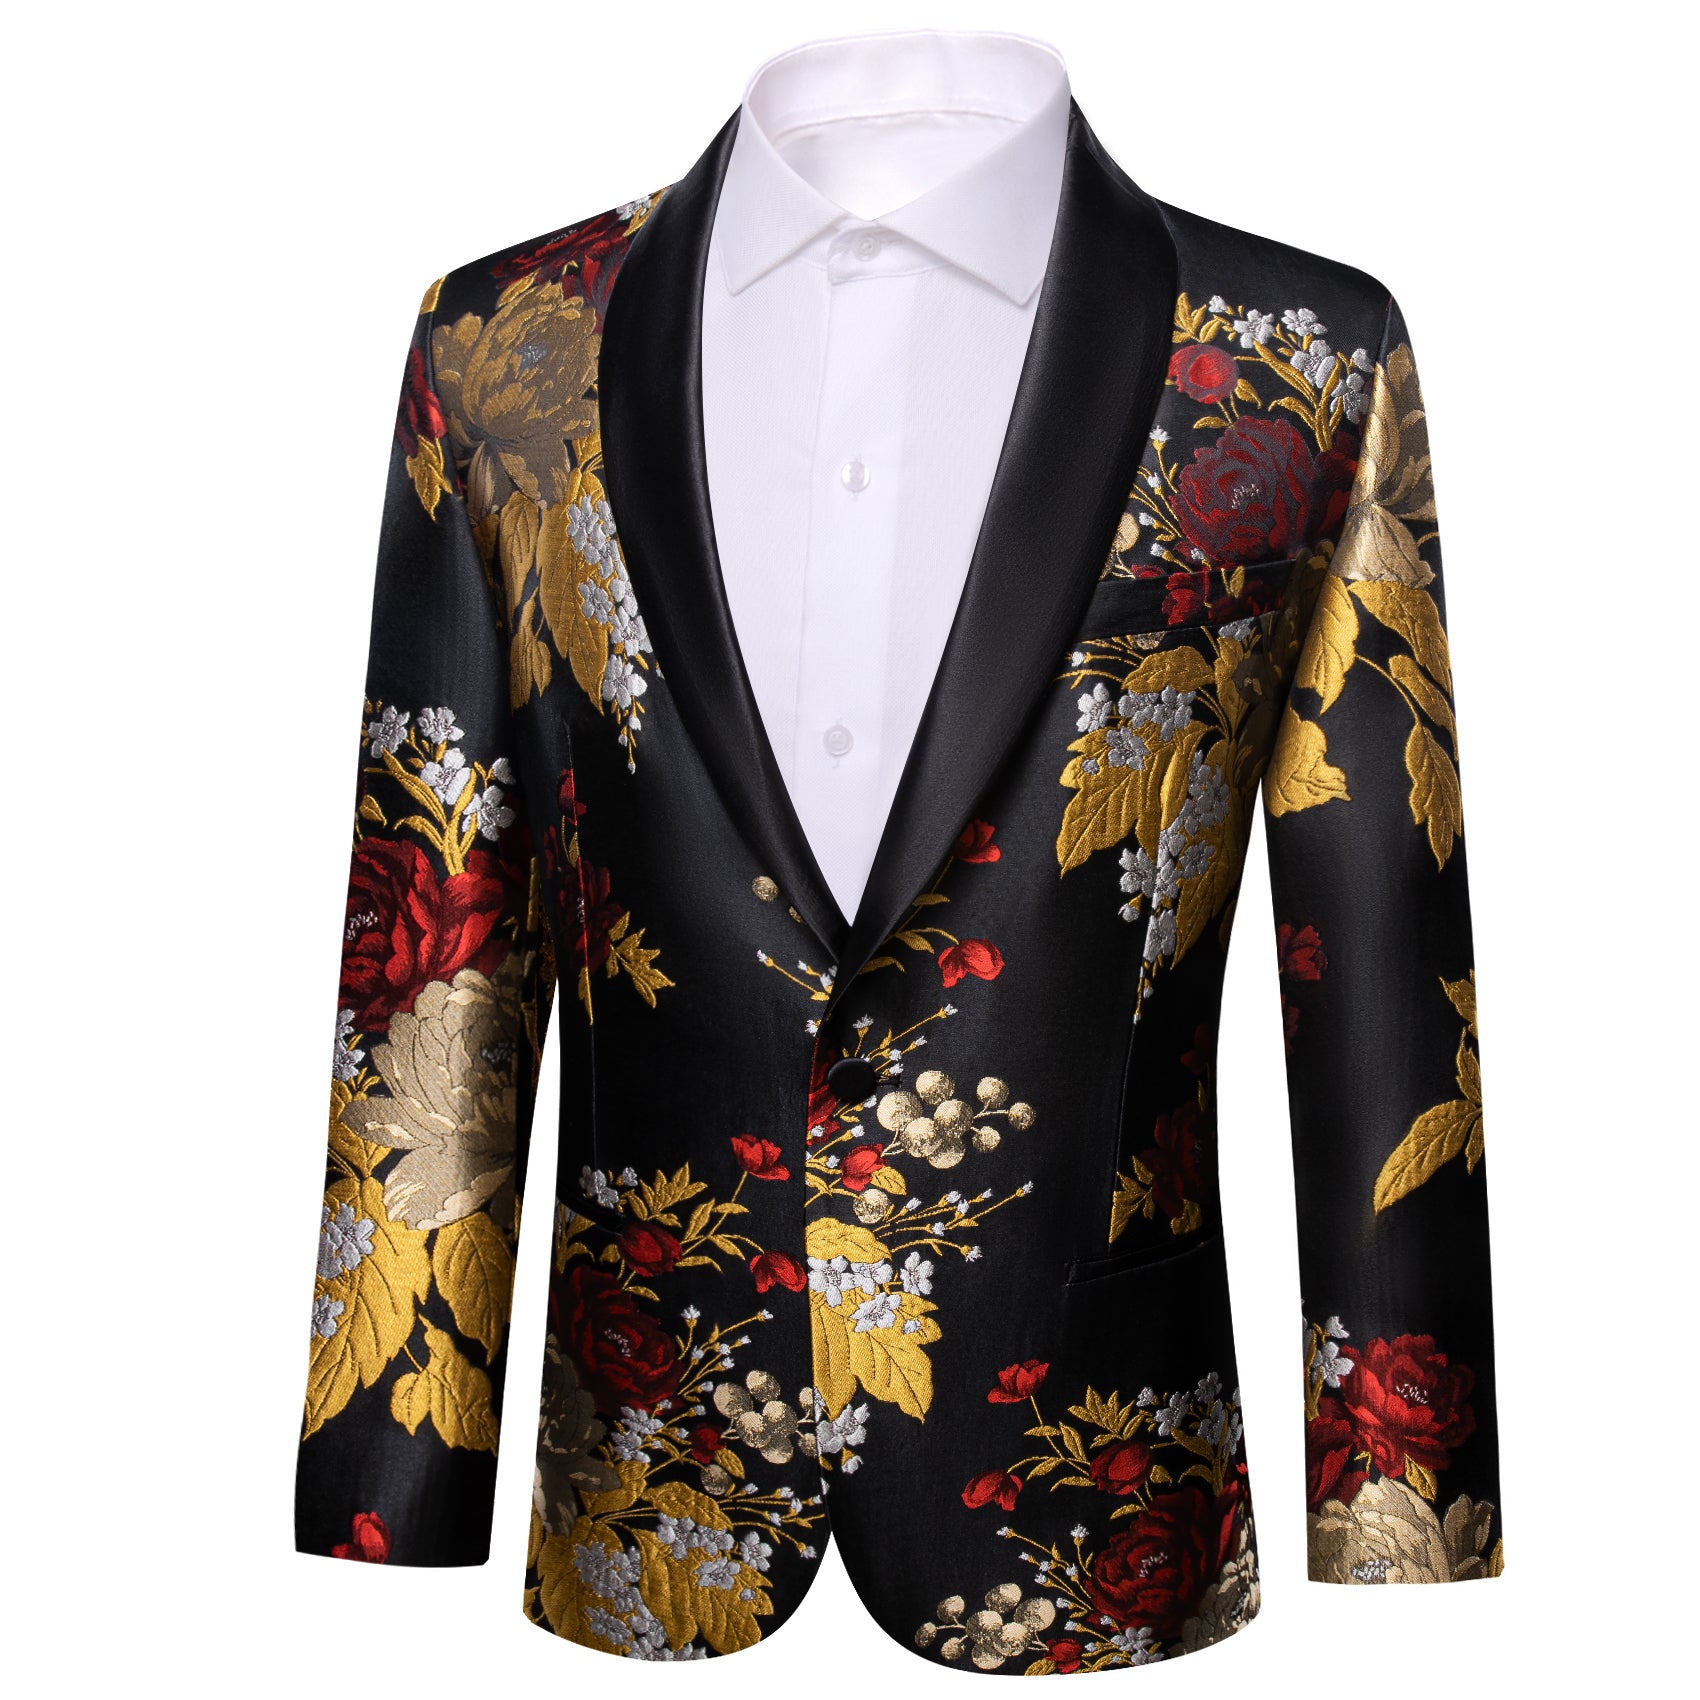 Men's Dress Party Black Yellow Floral Suit Jacket Slim One Button Stylish Blazer